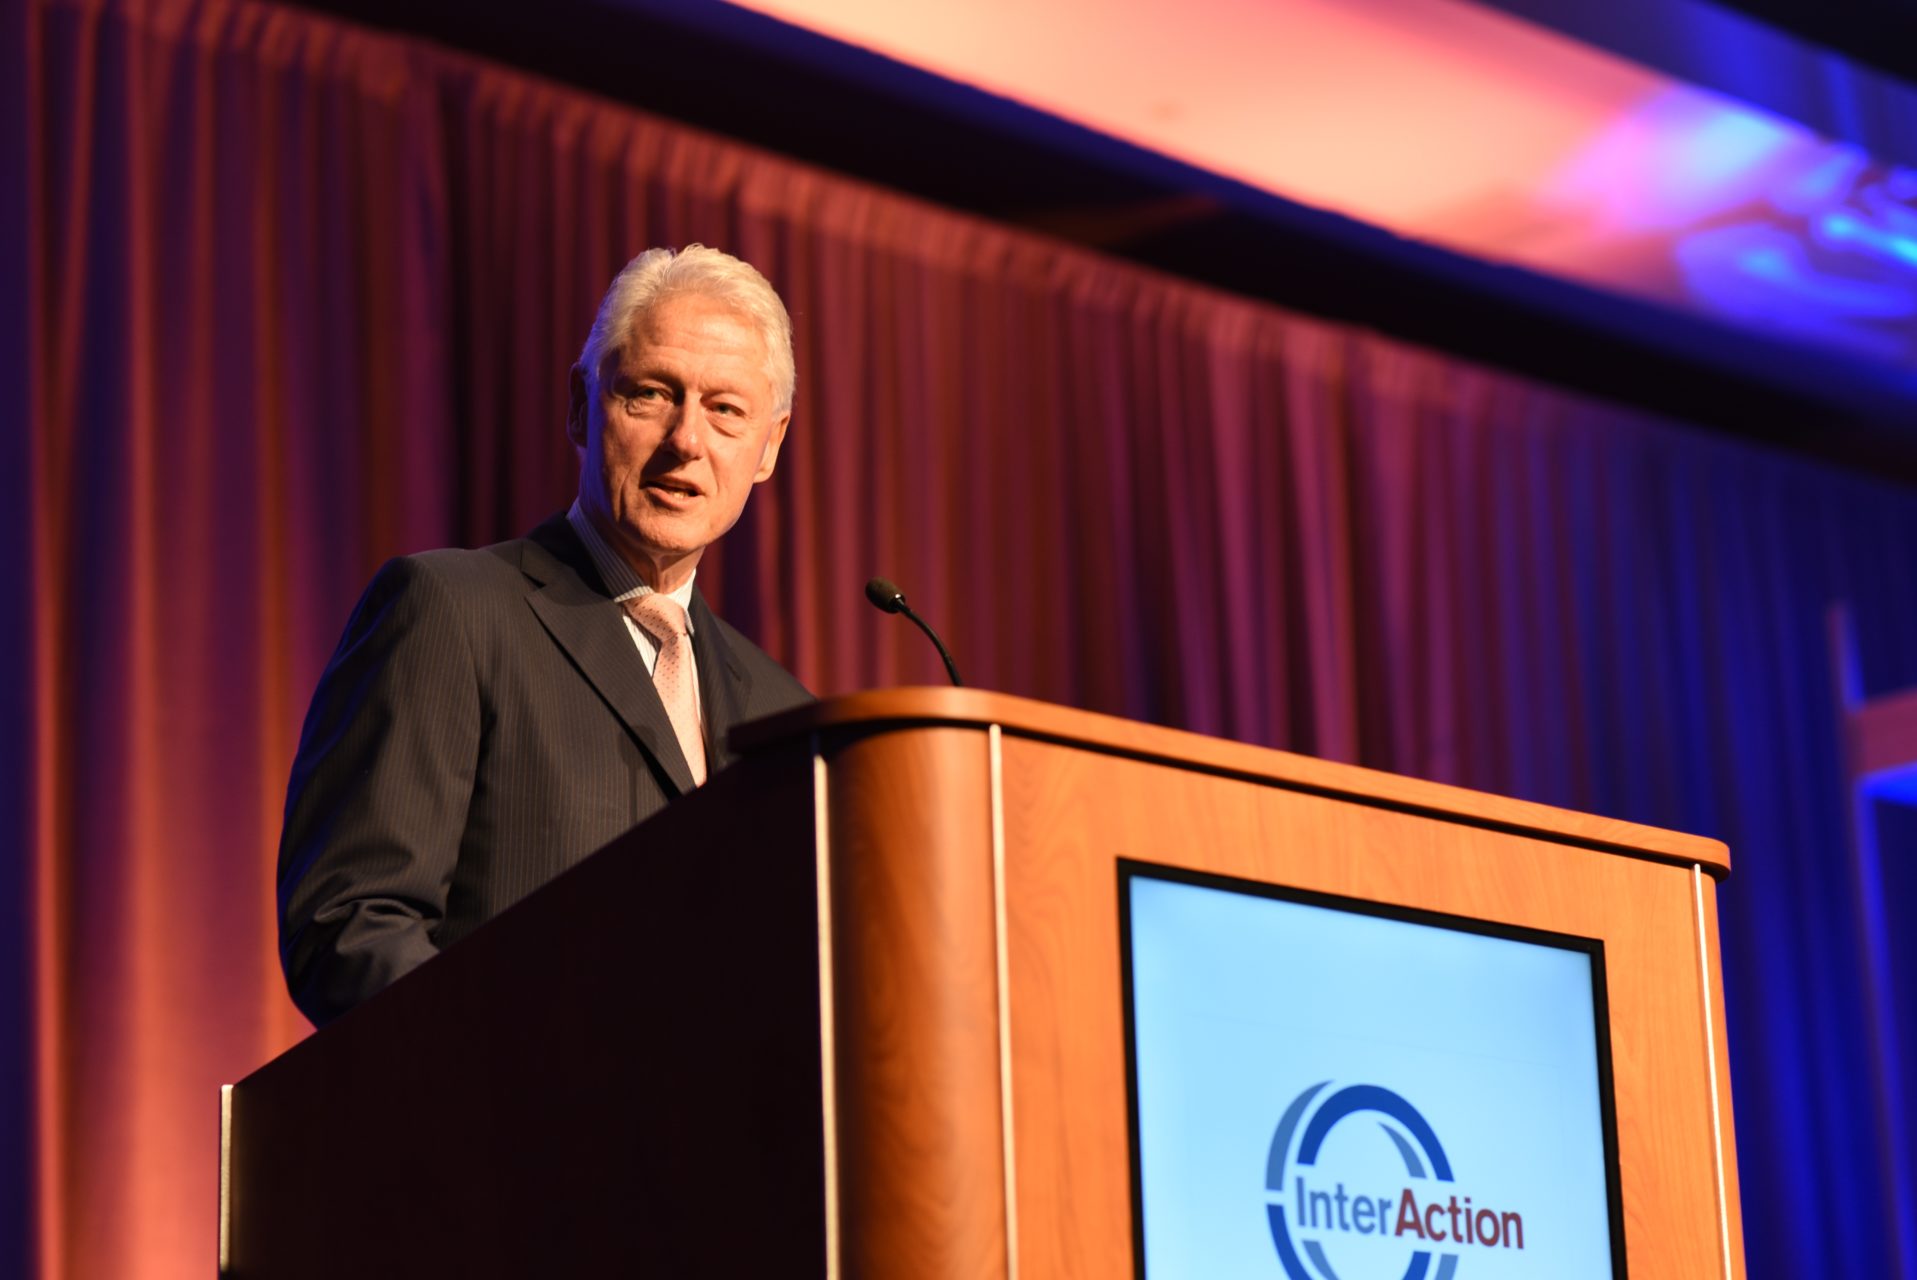 President Clinton at a podium.